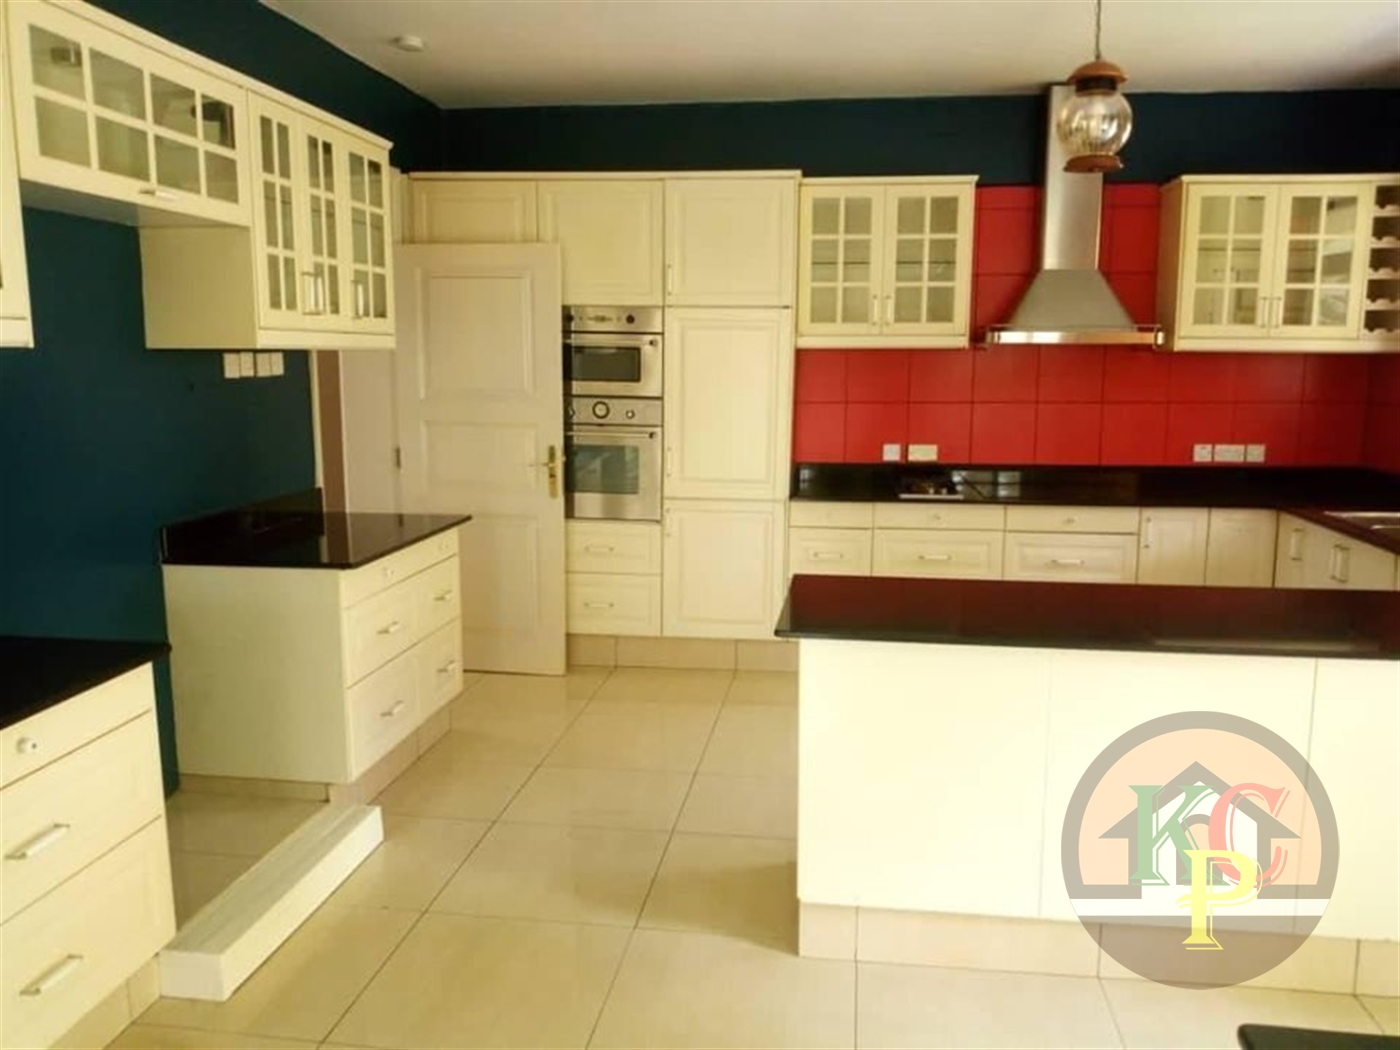 Mansion for rent in Lugogo Kampala